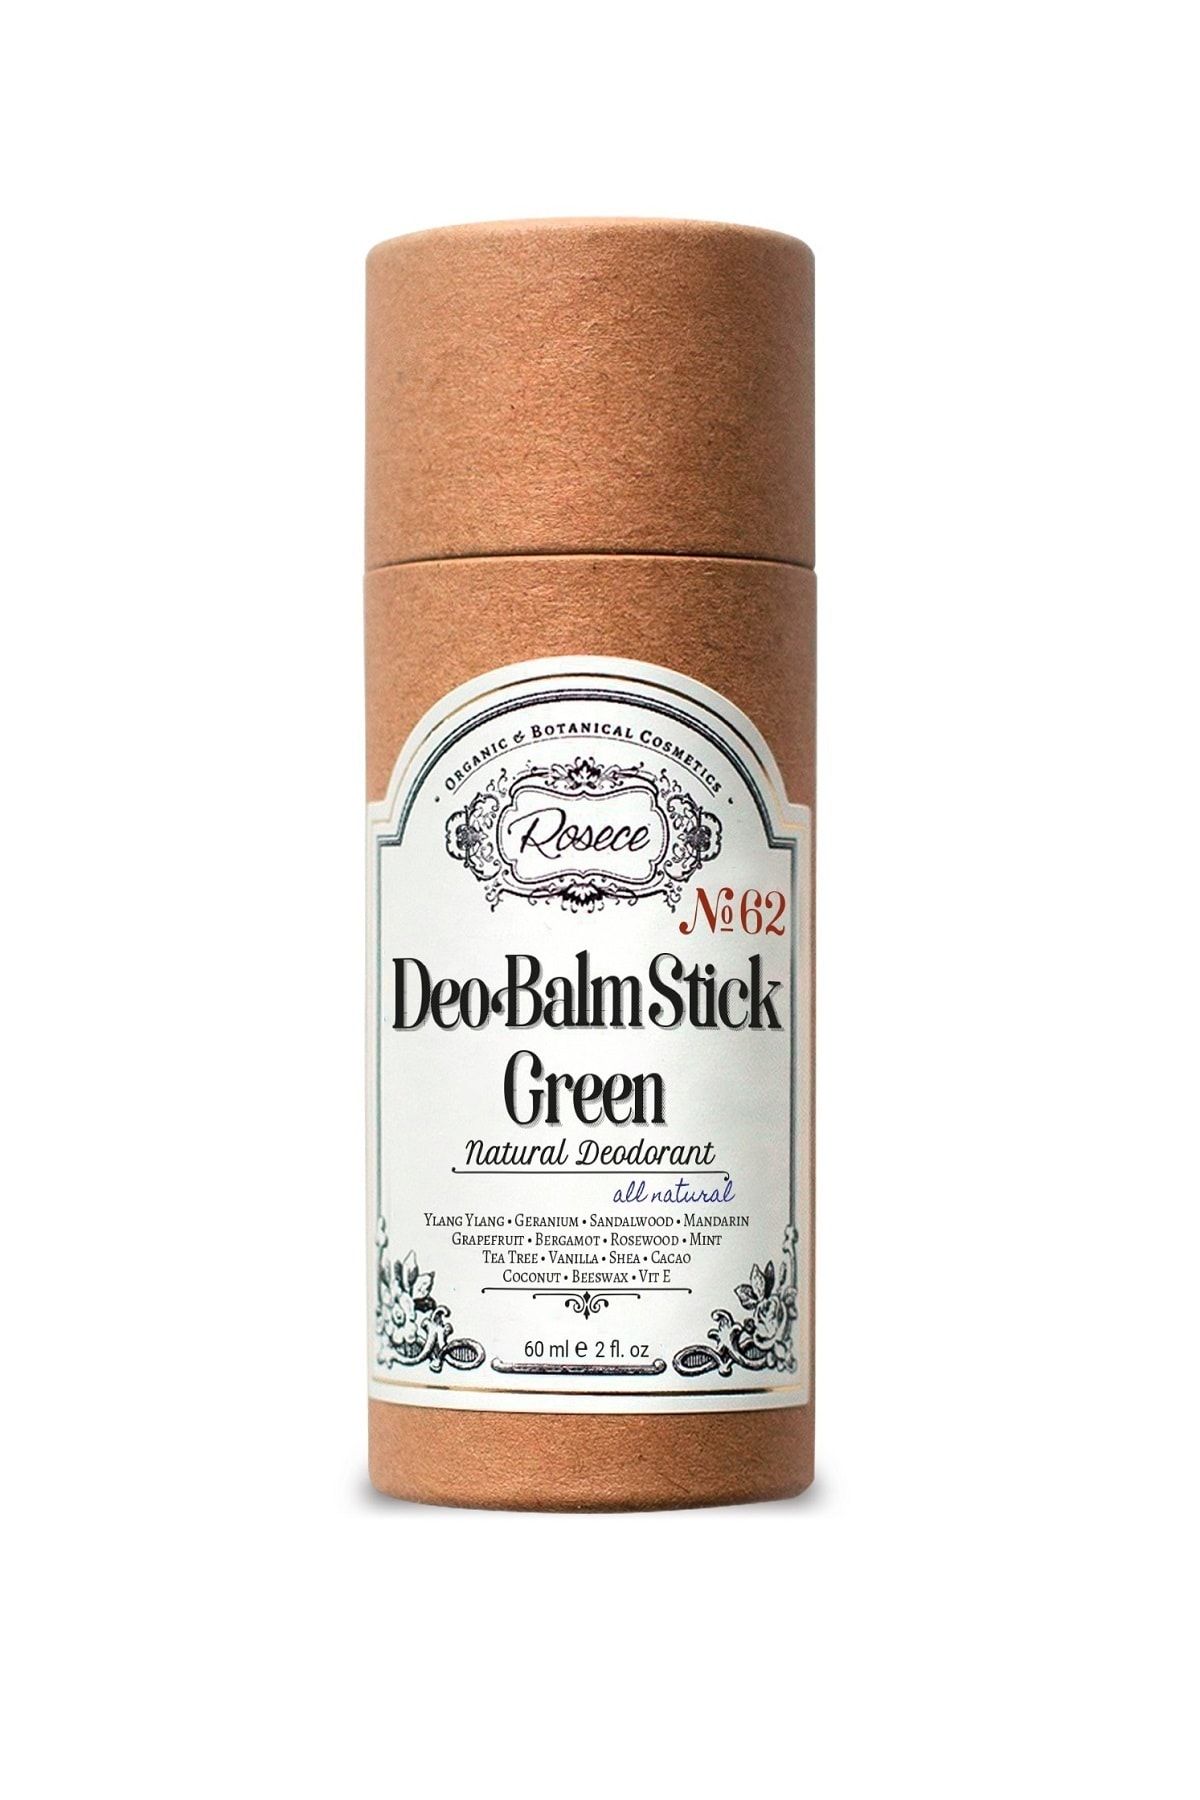 Rosece Doğal Deodorant / Deo Balm Stick Green